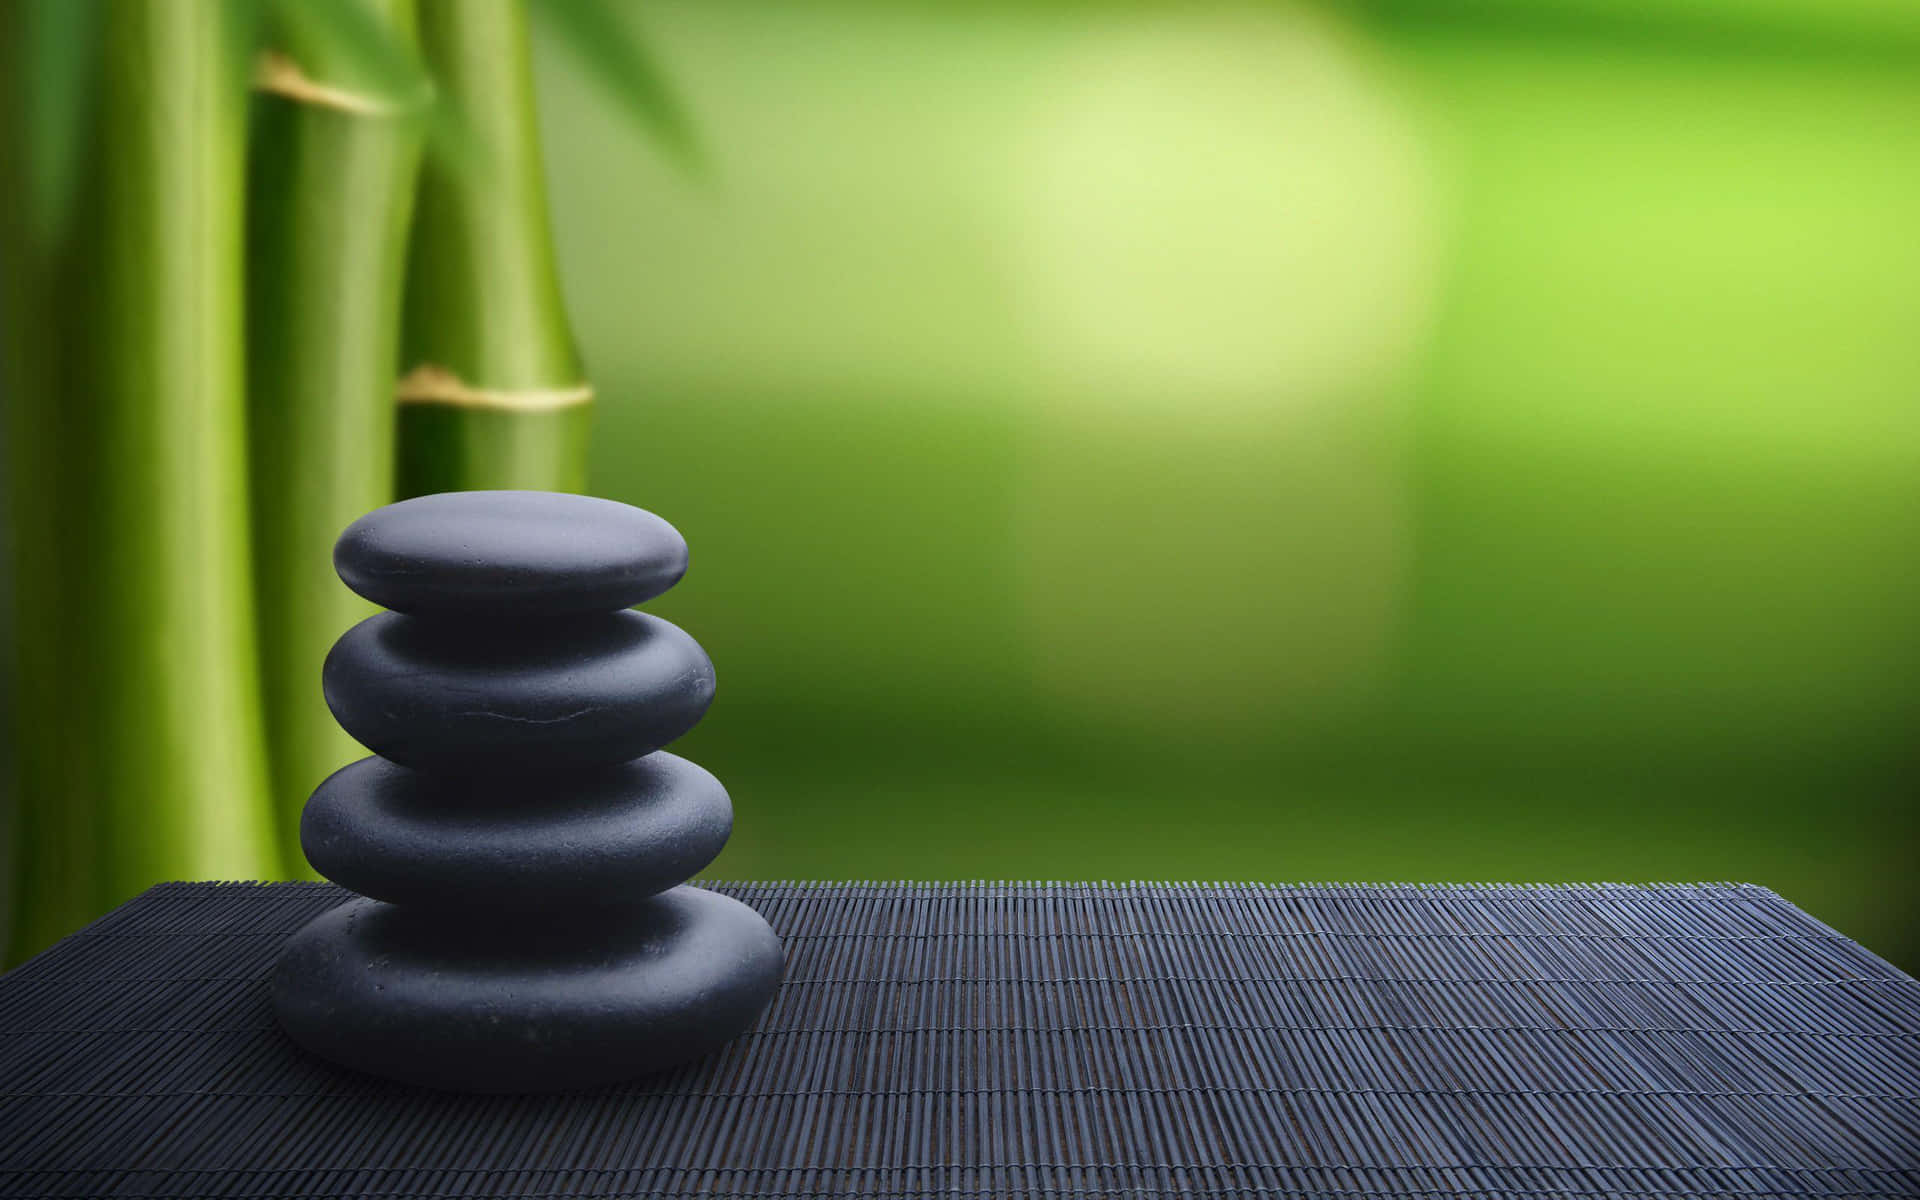 Zen Spa Stones Bamboo Green Background Wallpaper